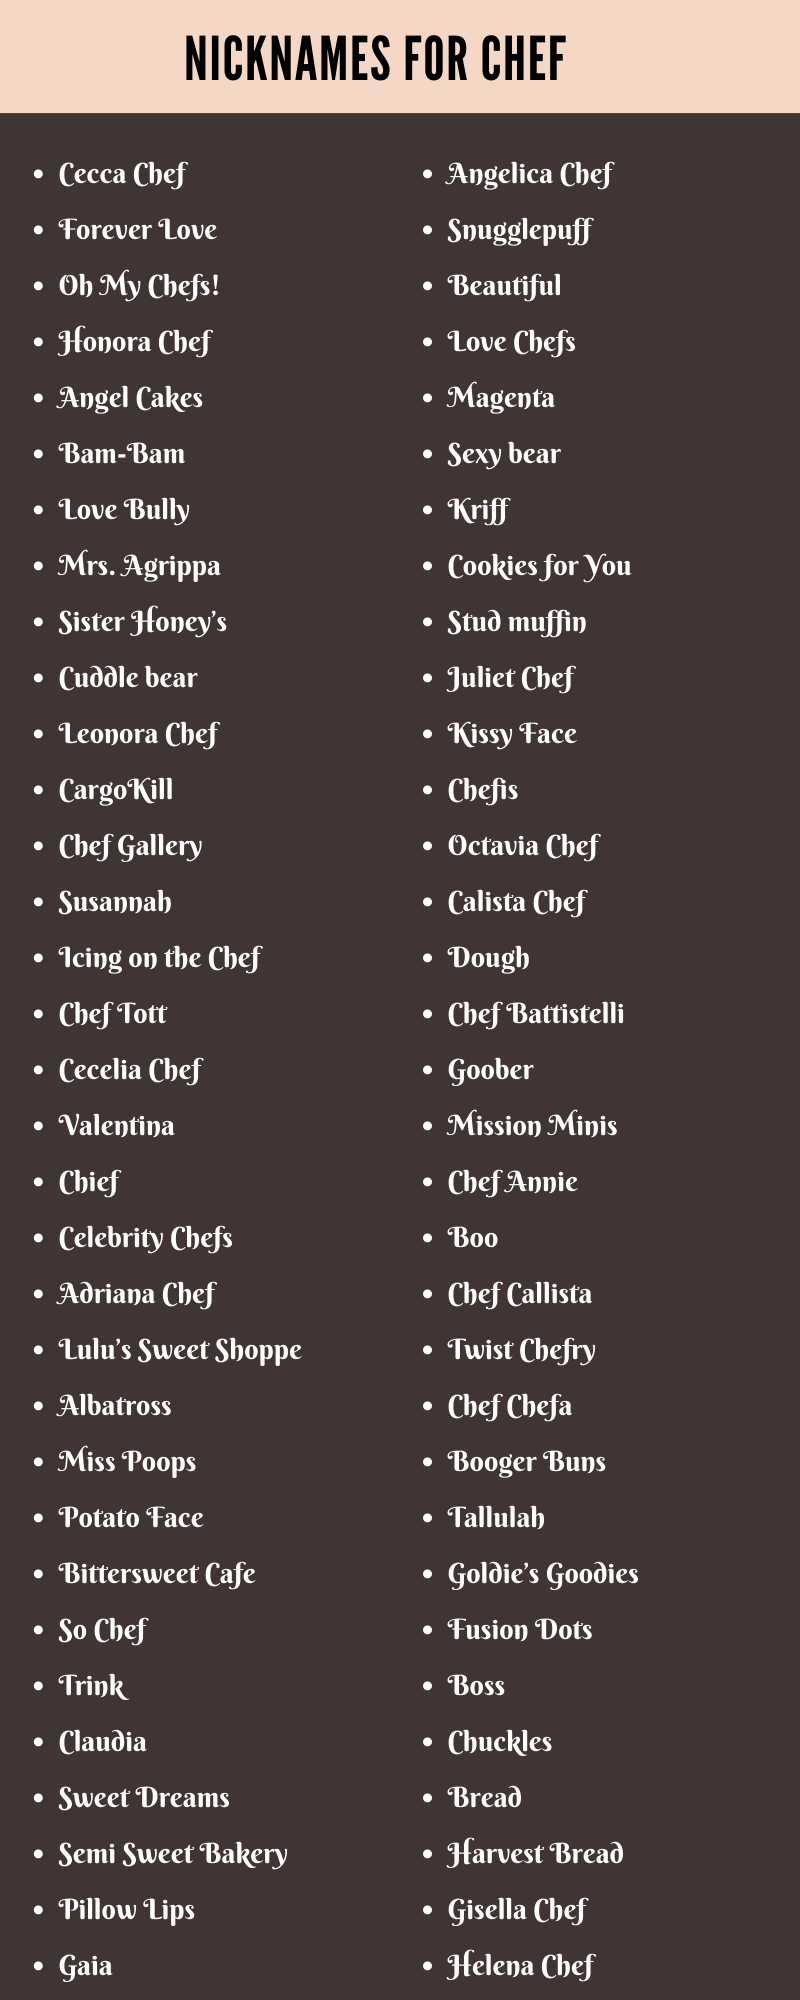 Nicknames For Chef